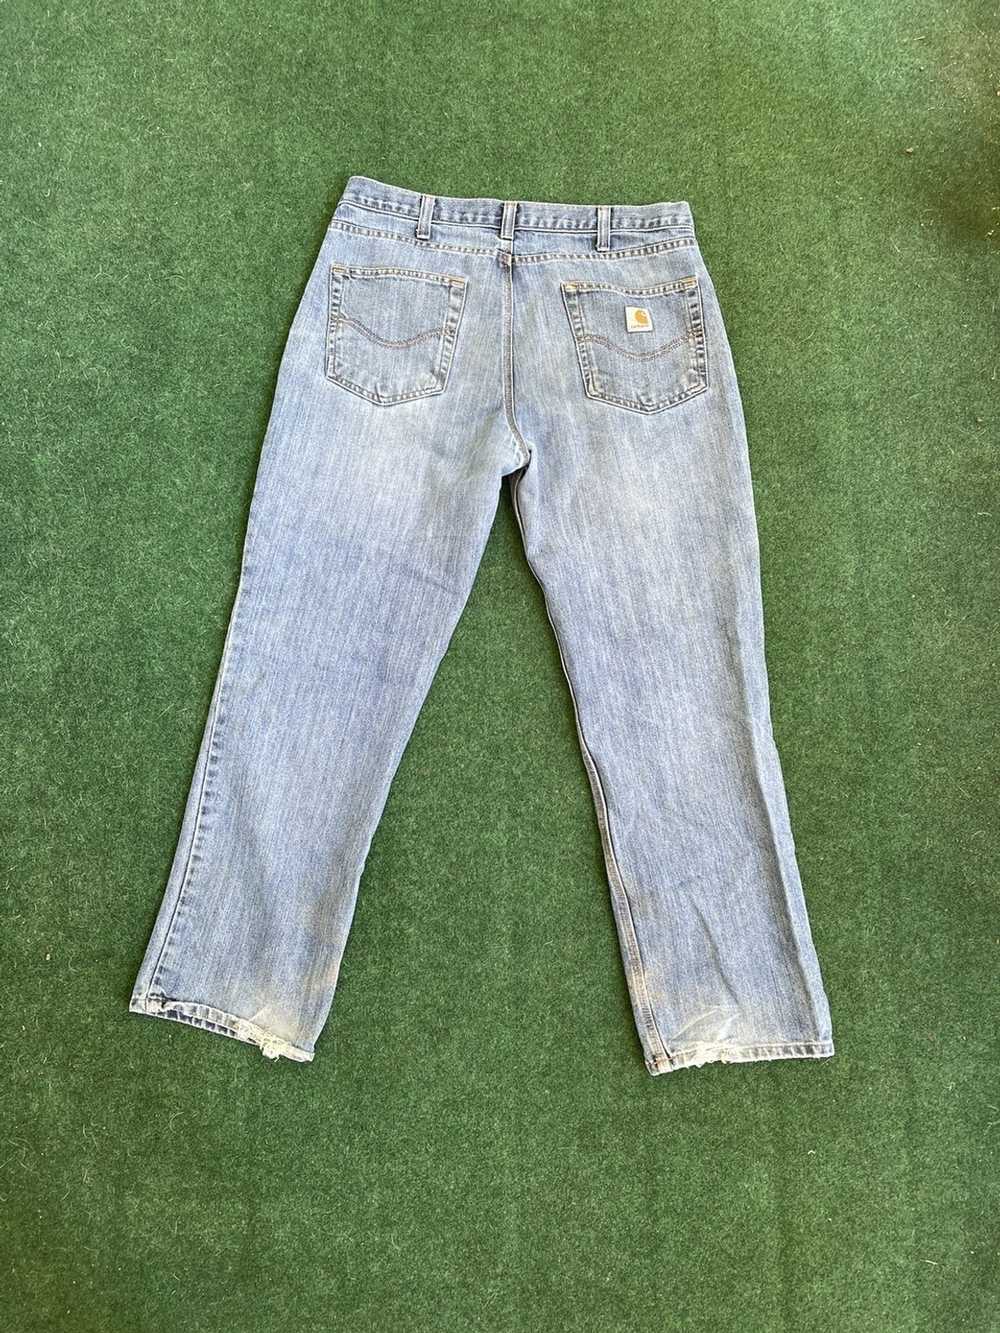 Carhartt × Vintage Vintage Carhartt Jeans - image 4